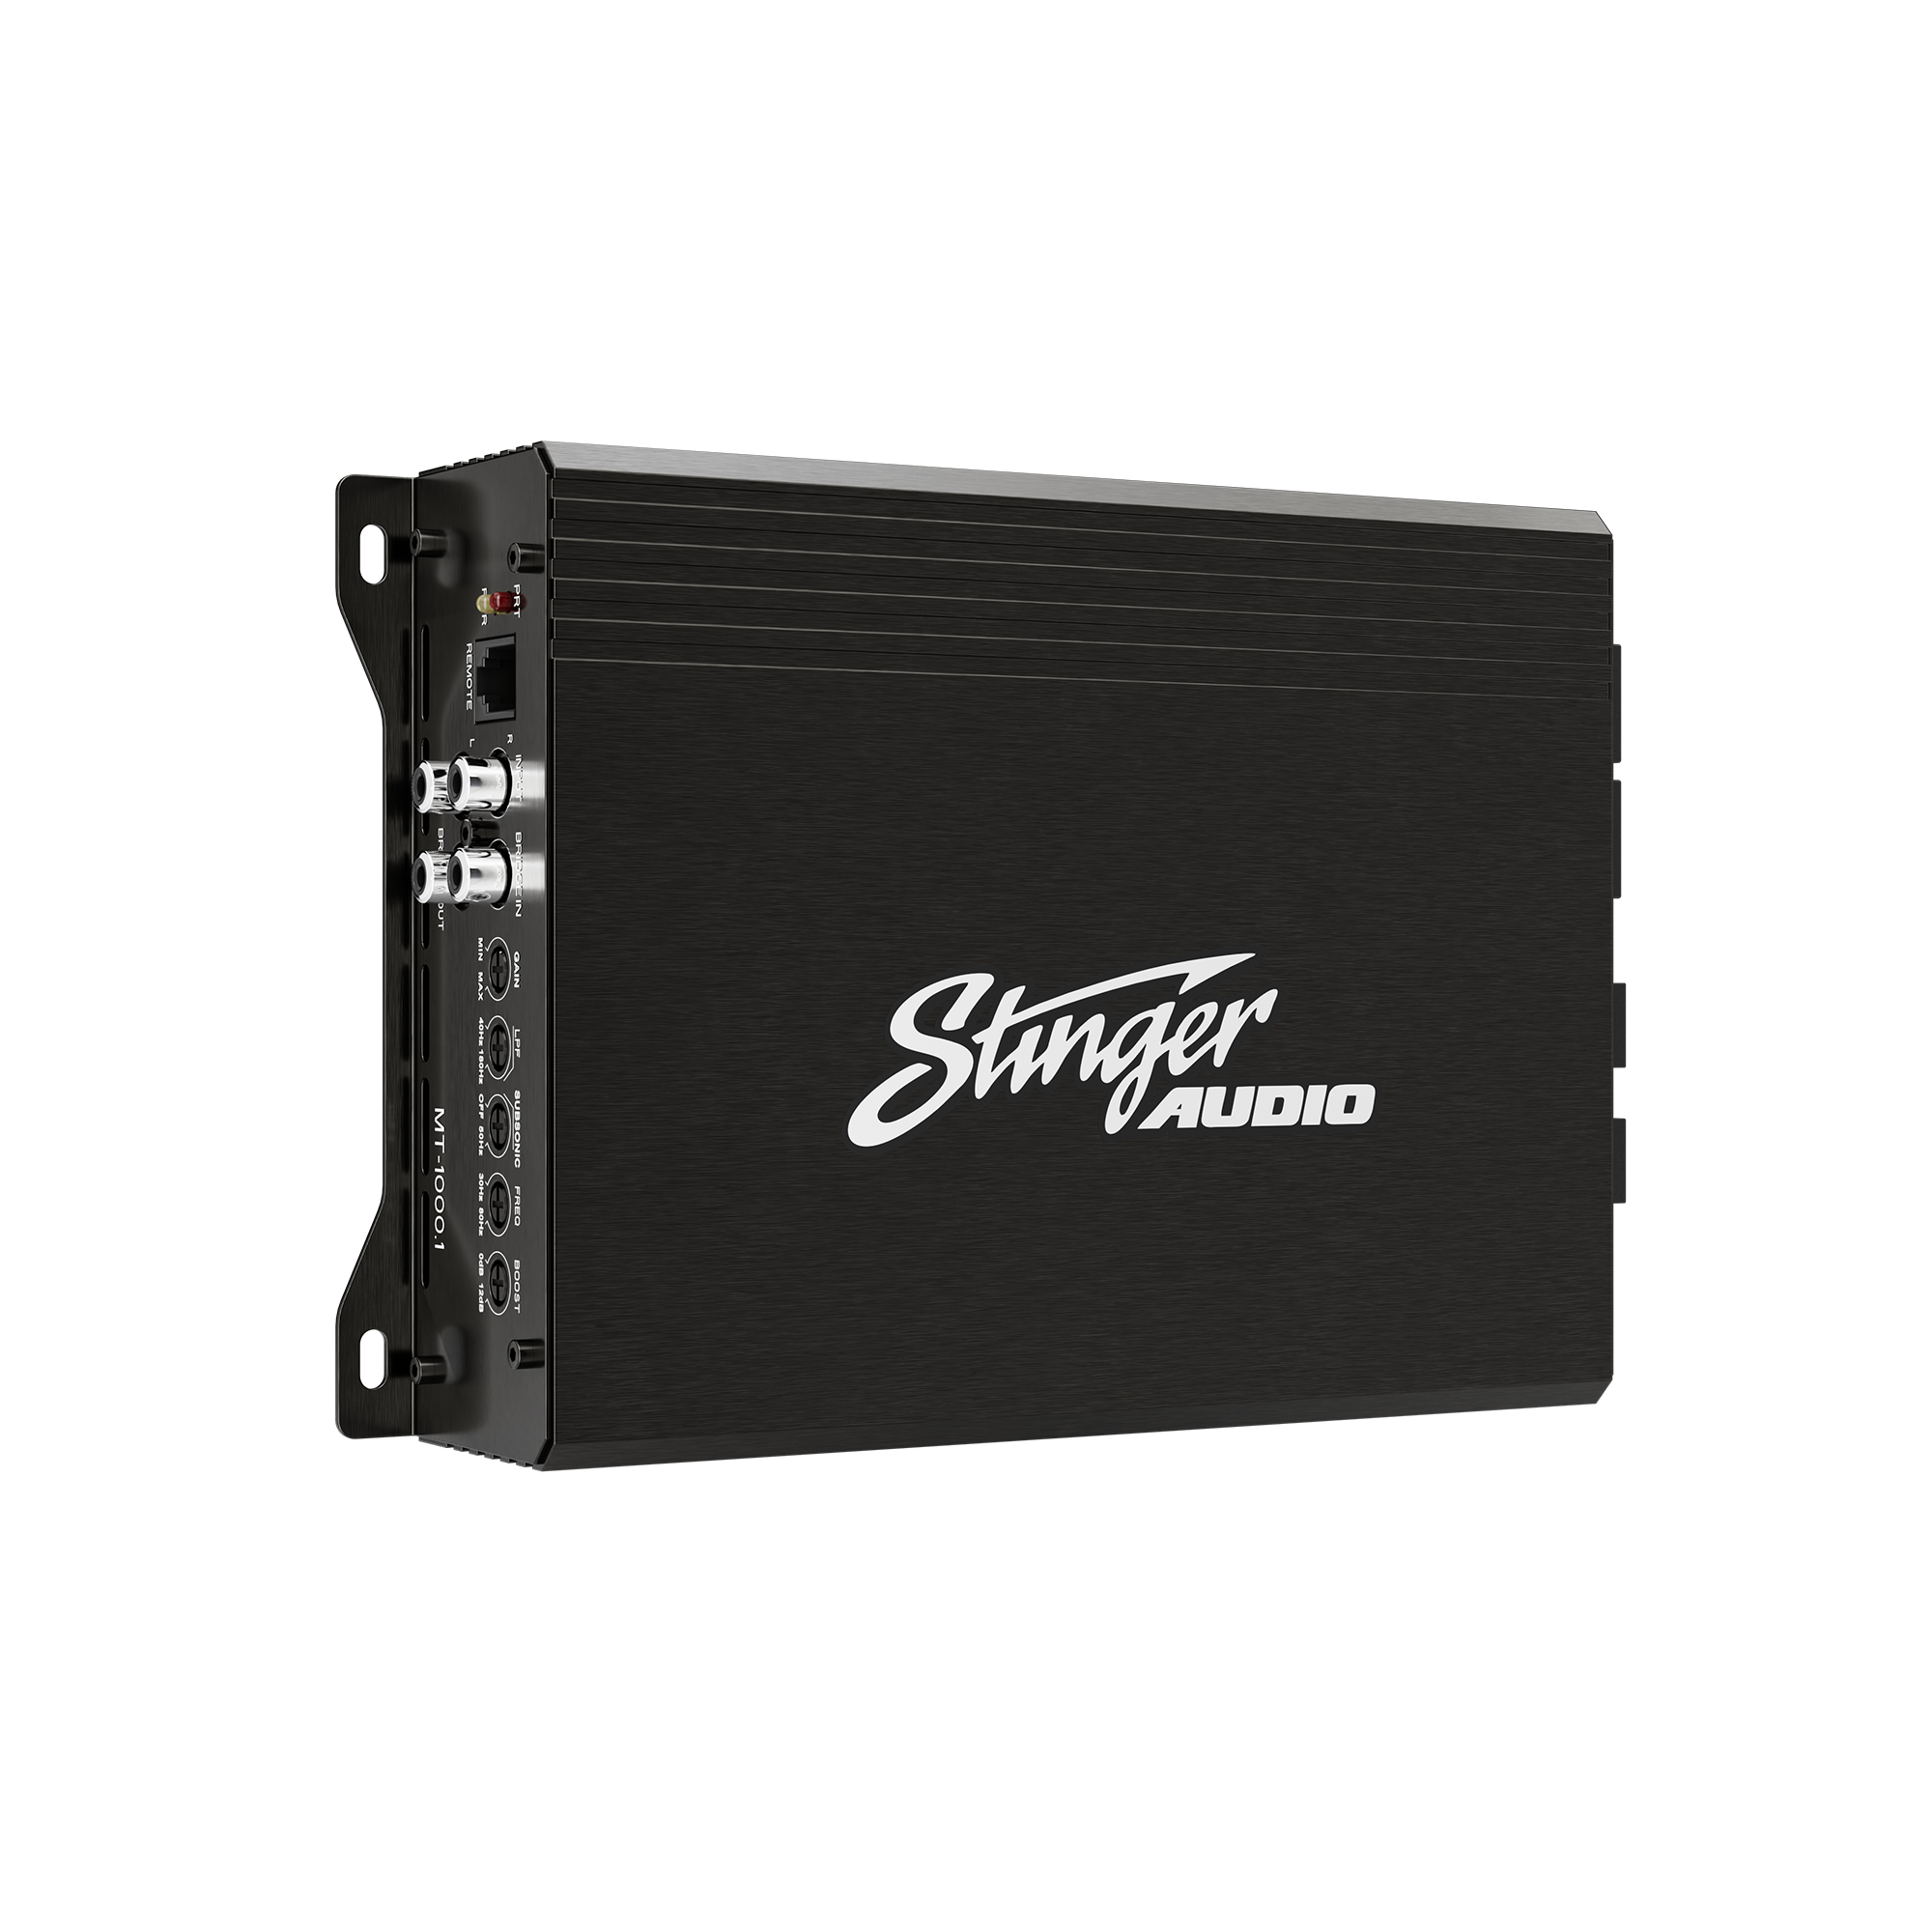 Stinger Audio MT-1000.1 1,000 Watt (RMS) Class D Monoblock Car Audio Amplifier